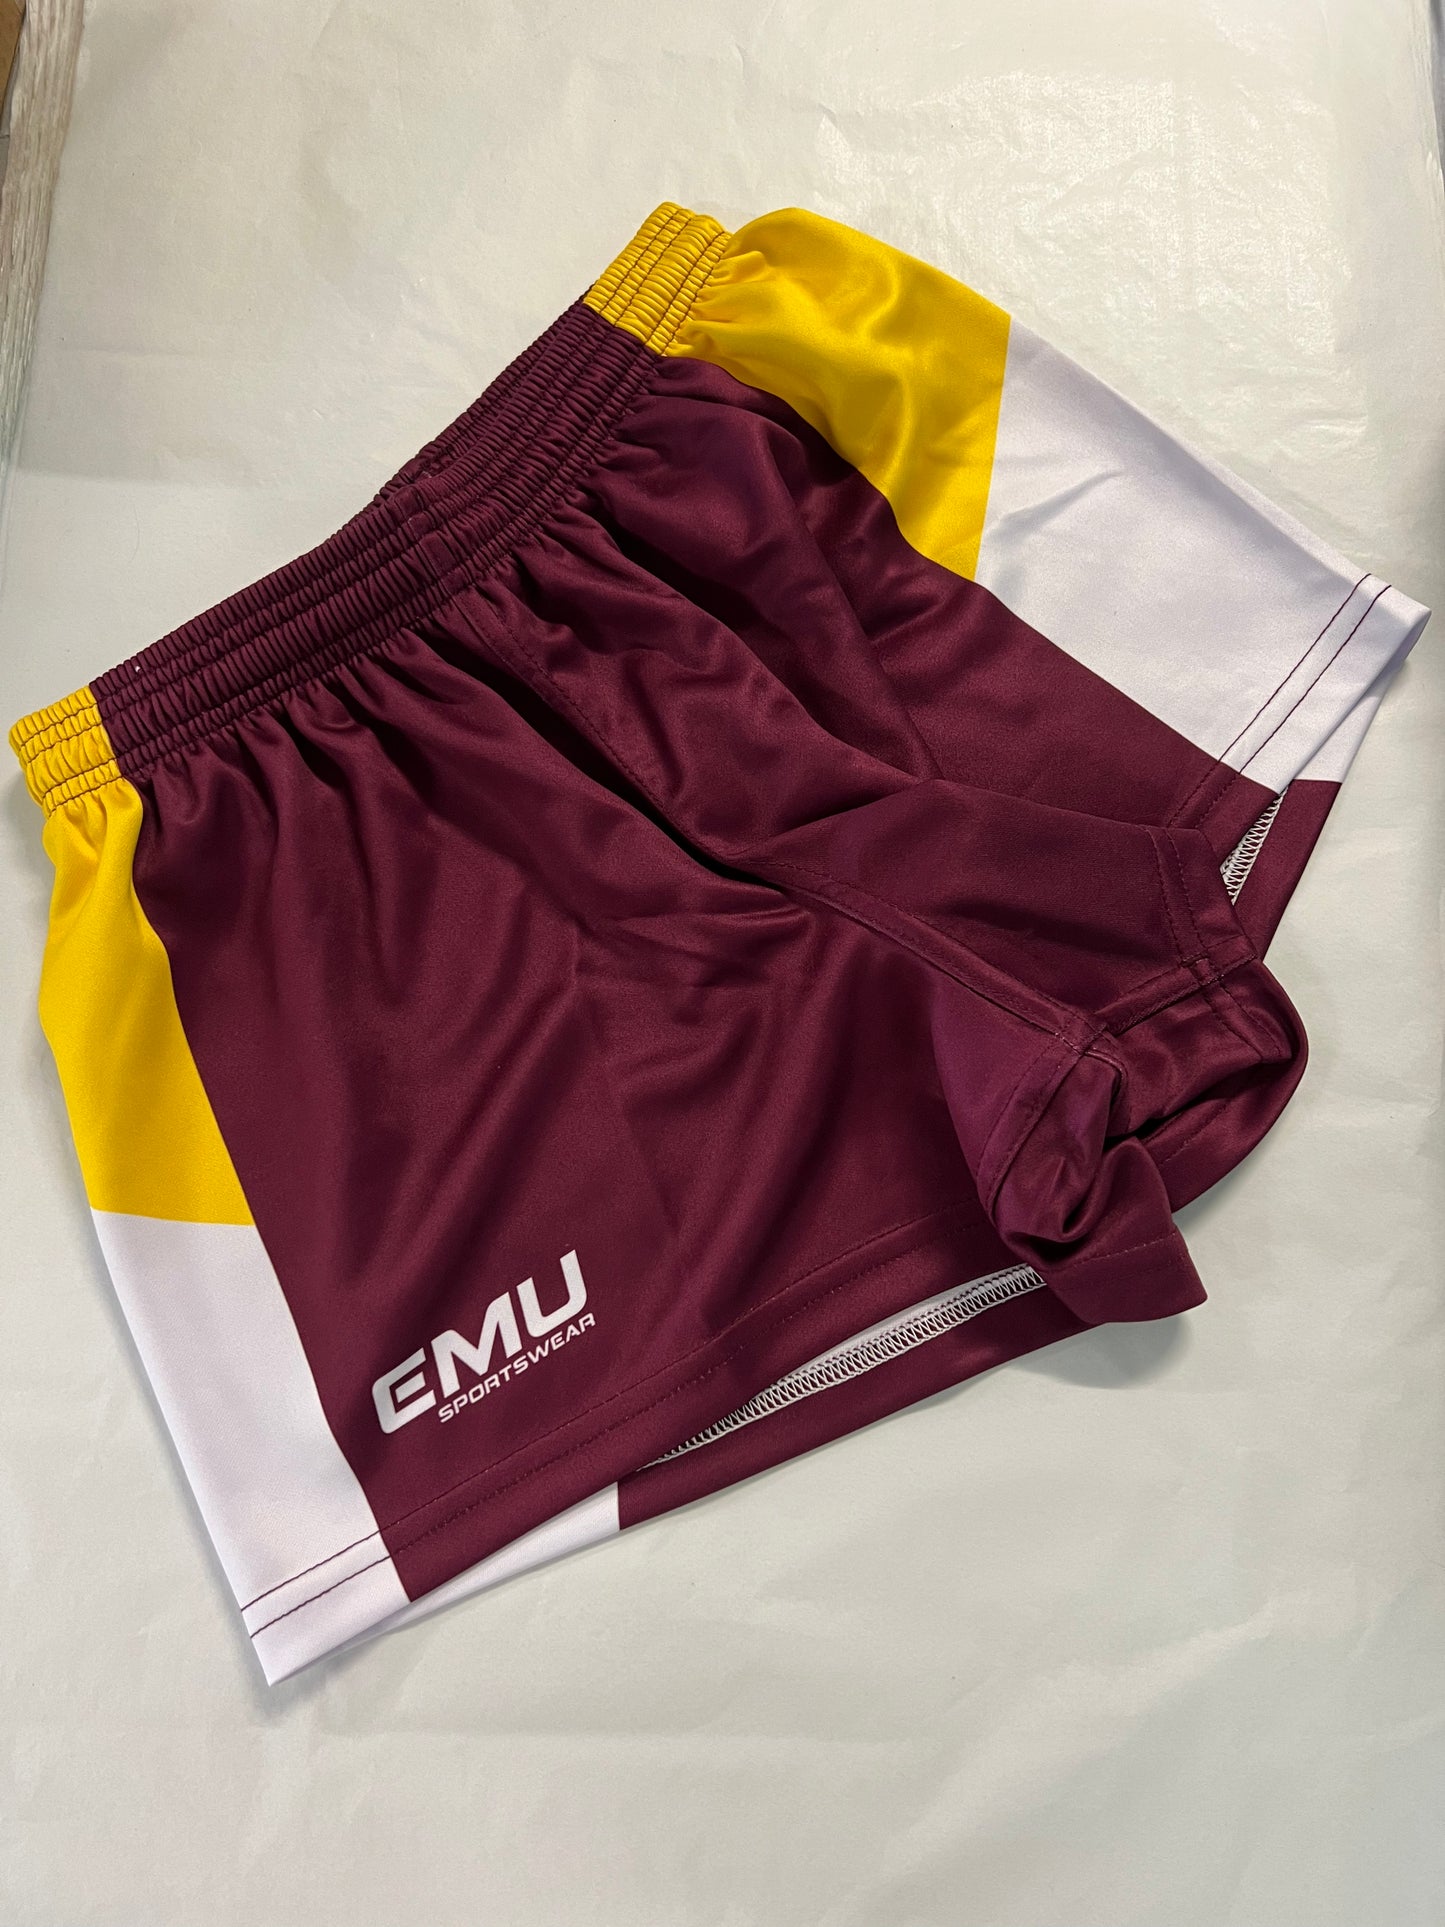 EMU Sportswear  - Adult Footy Shorts - Yellow/Maroon